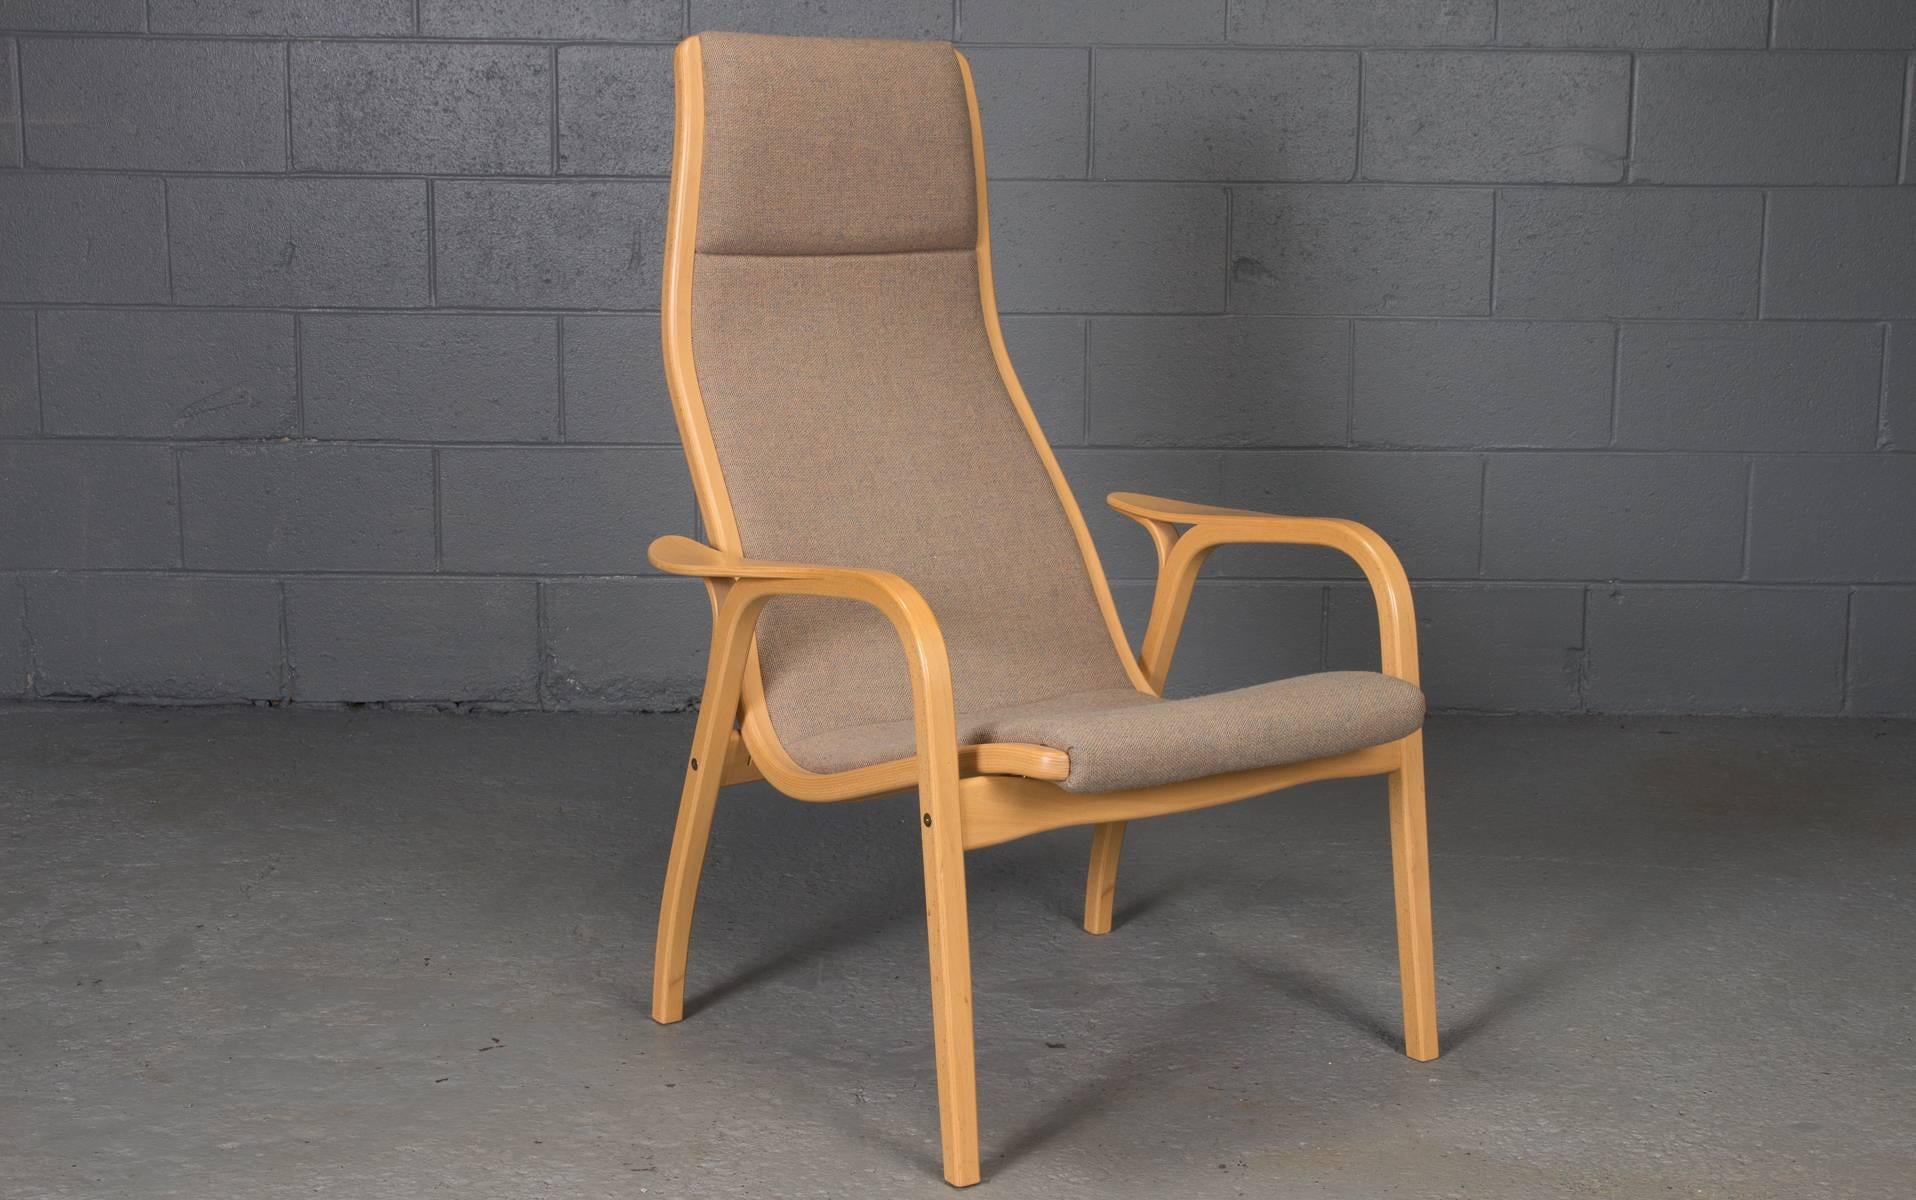 ekstrom chair